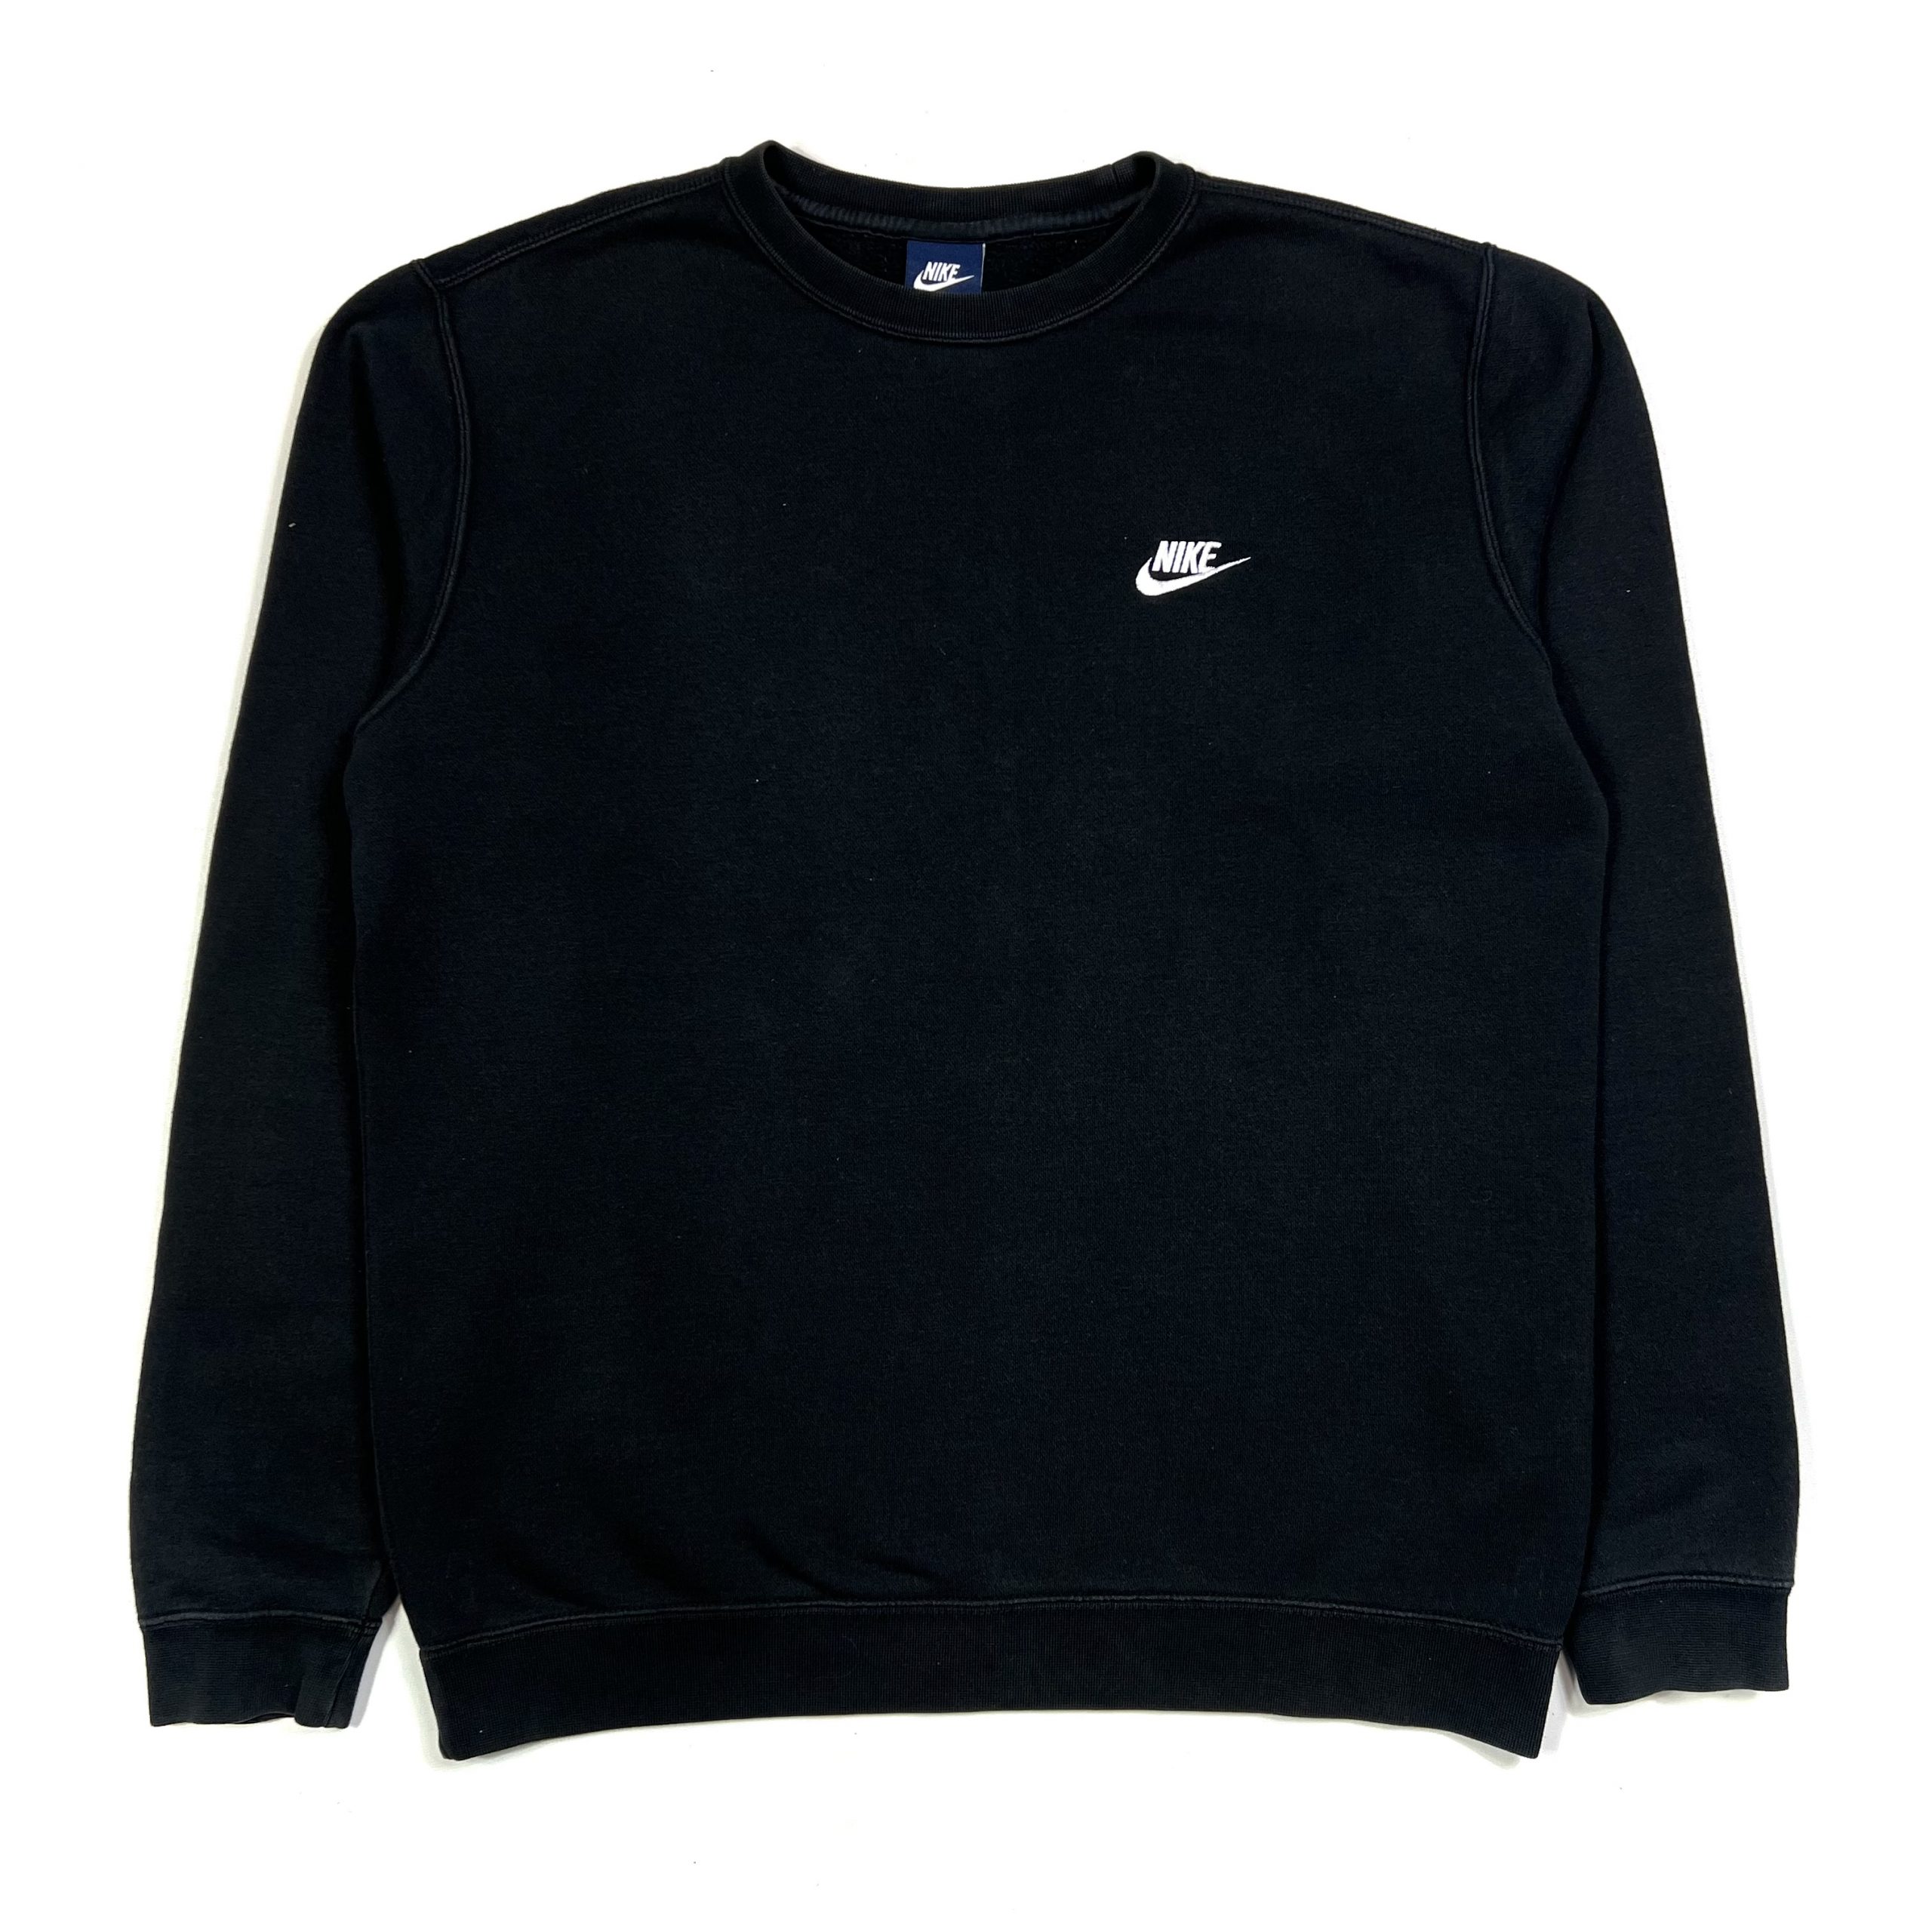 Nike Essential Sweatshirt - Black - M - TMC Vintage - Vintage Clothing